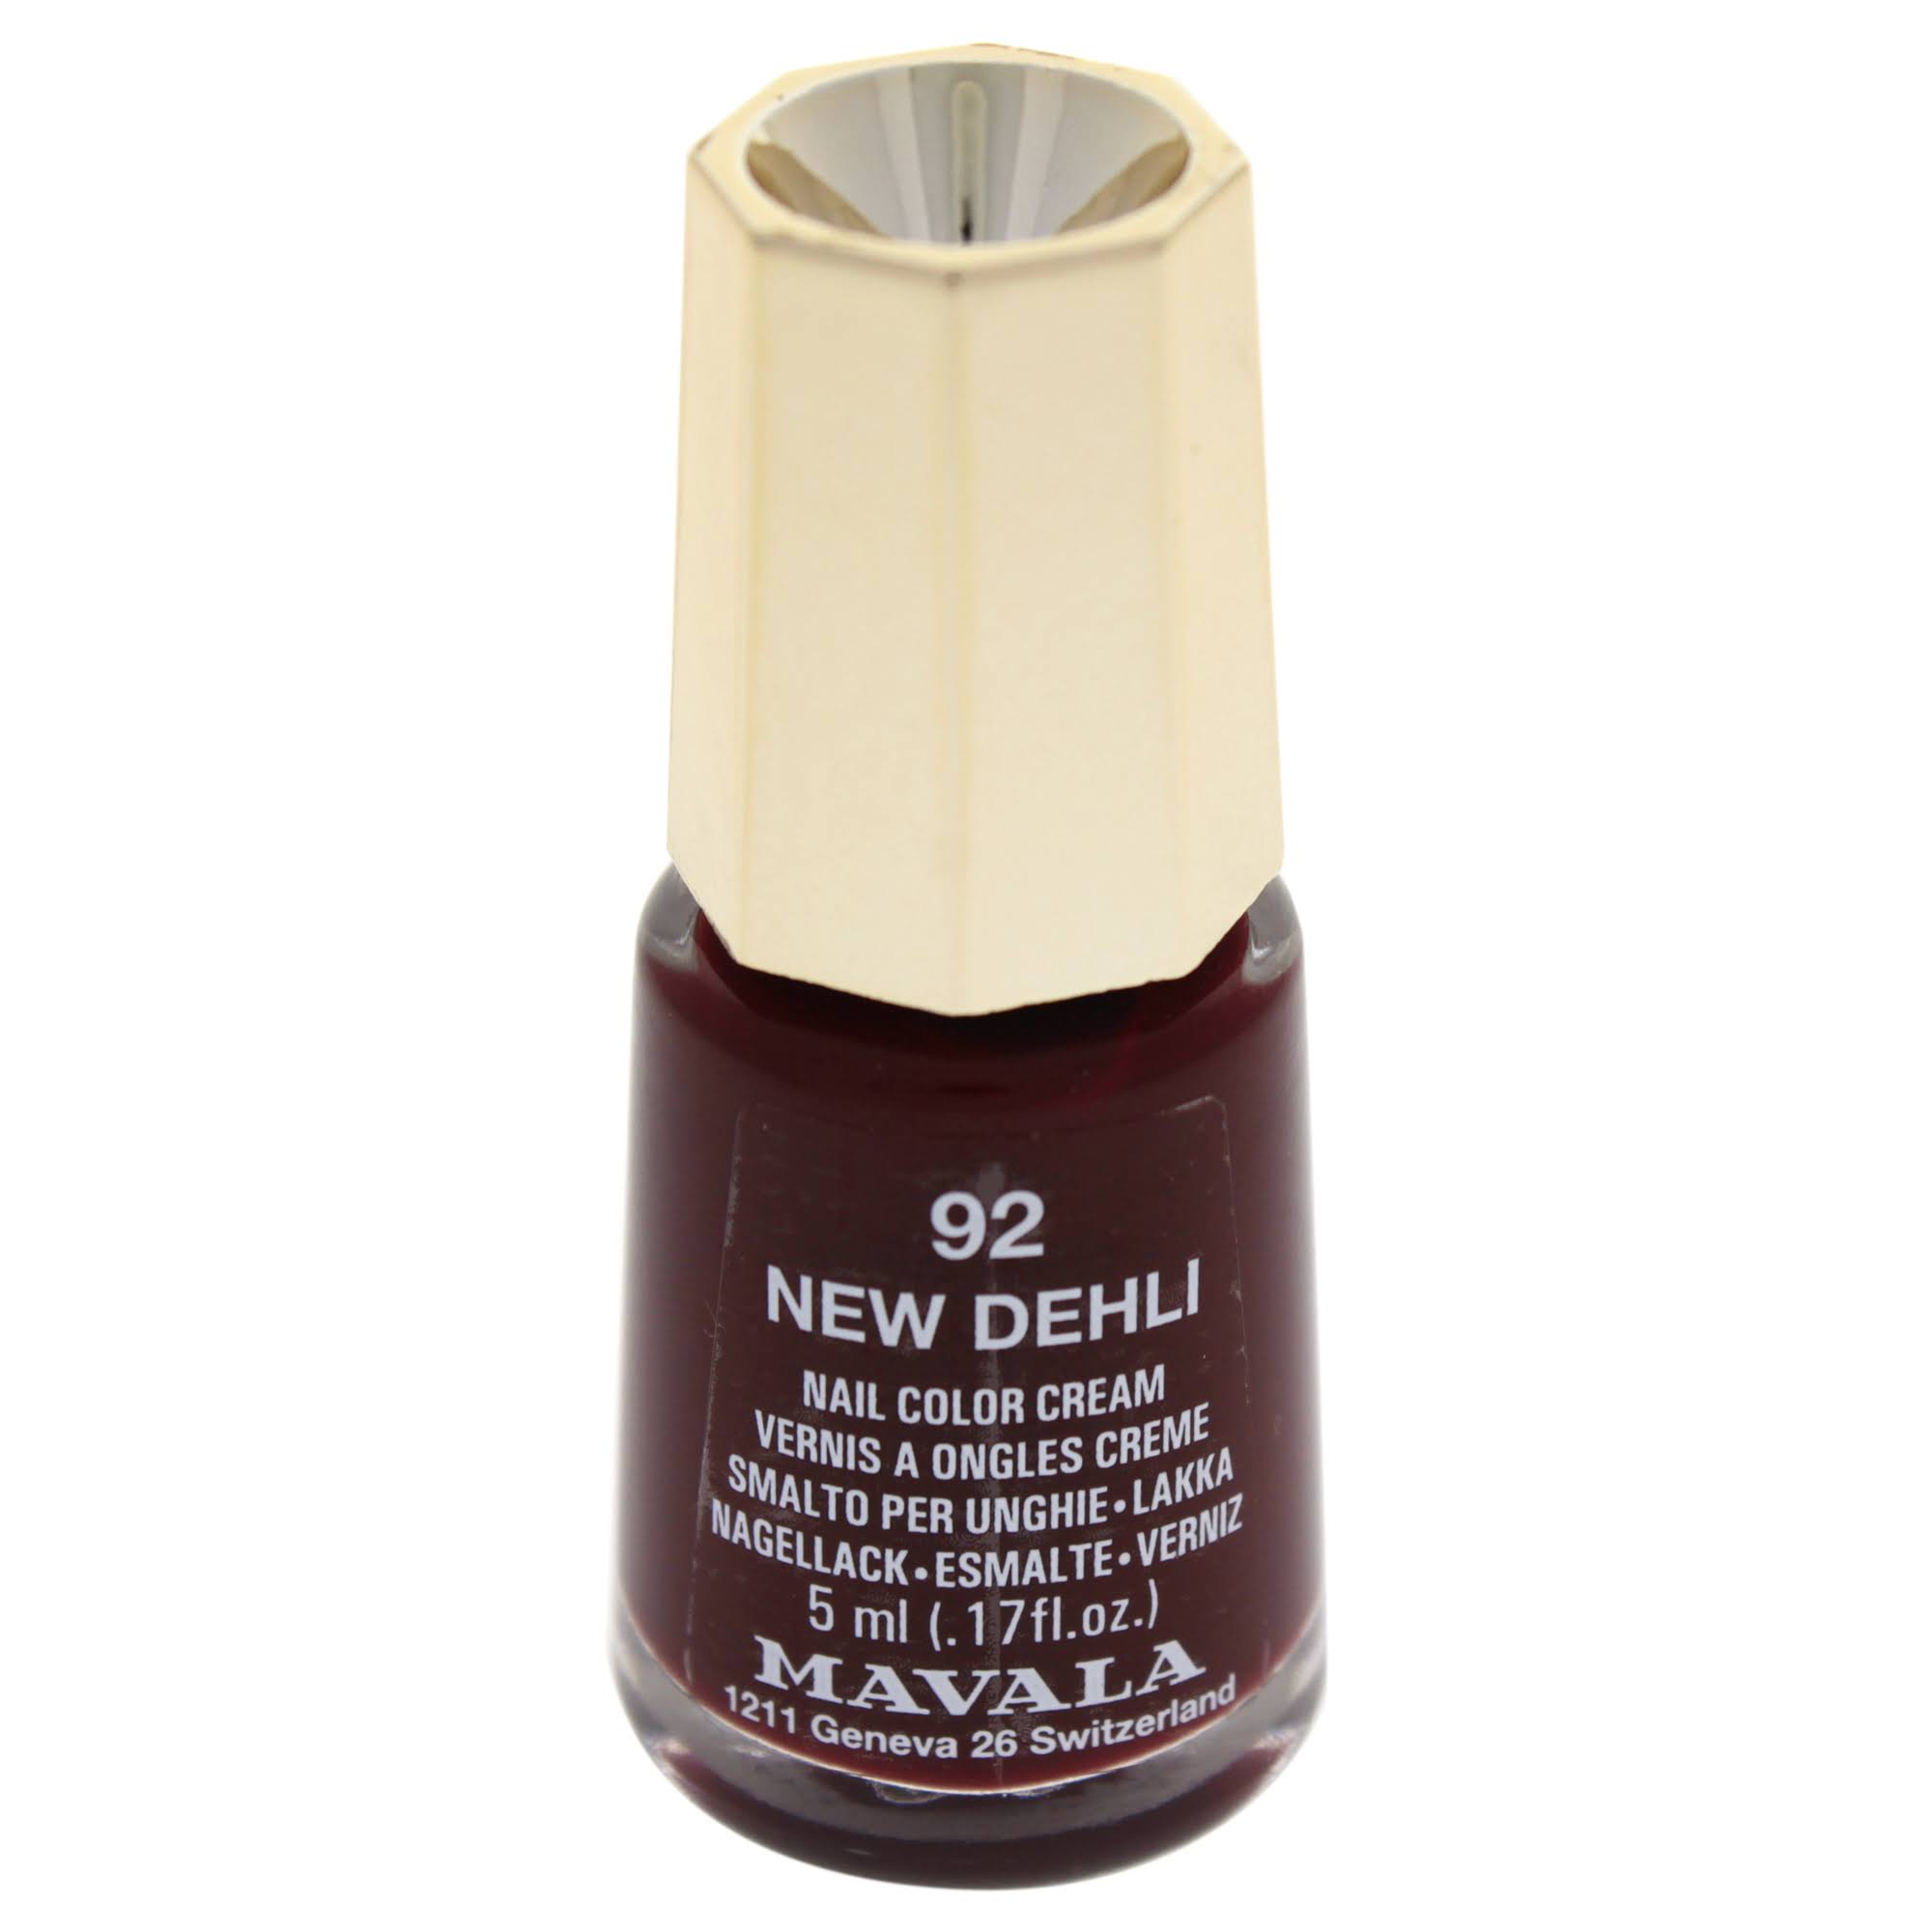 Mavala Switzerland Nail Color Cream 92 New Delhi